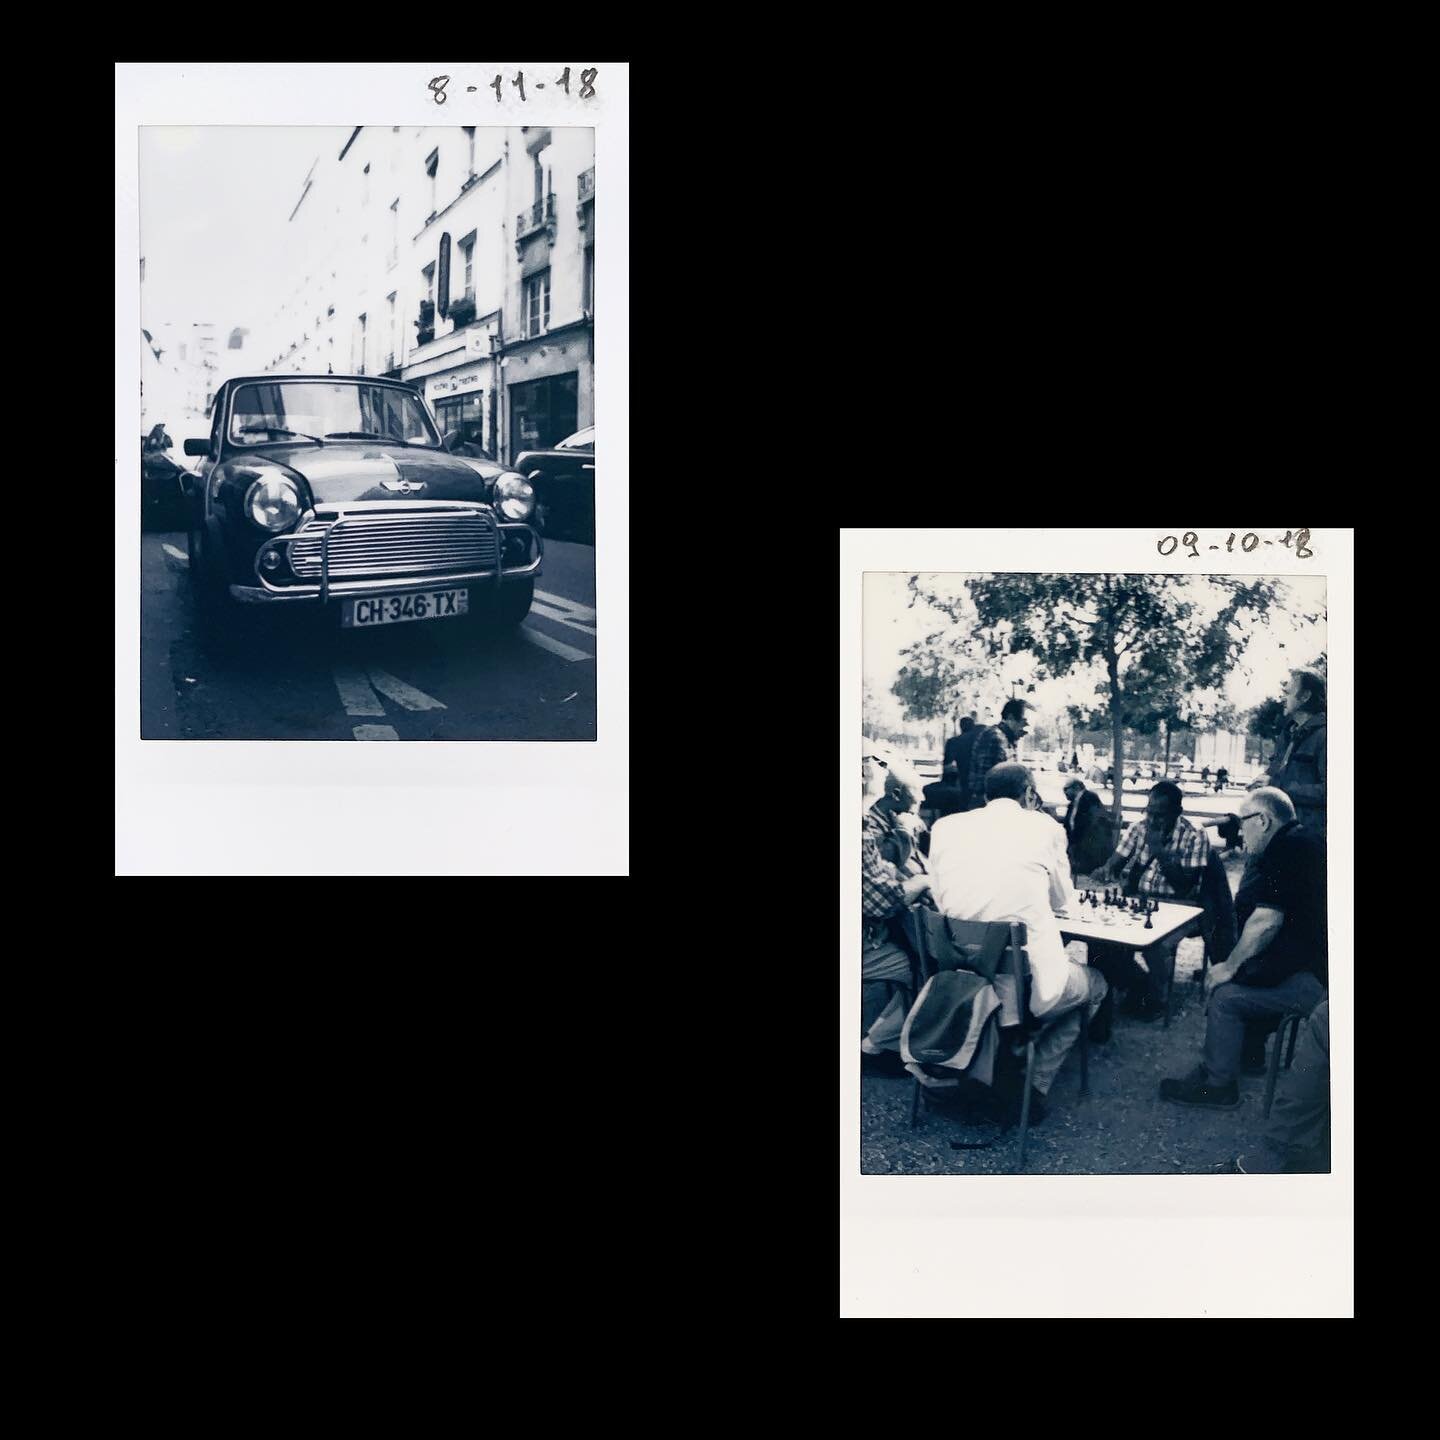 #paris #france #monochrome #blackandwhite #blackandwhitephotography #polaroid #polaroids #instantphoto #photography #fujifilm #instax #photo #photos #pic #pics #picture #pictures #snapshot #art #picoftheday #photooftheday #travel #traveling #vacation